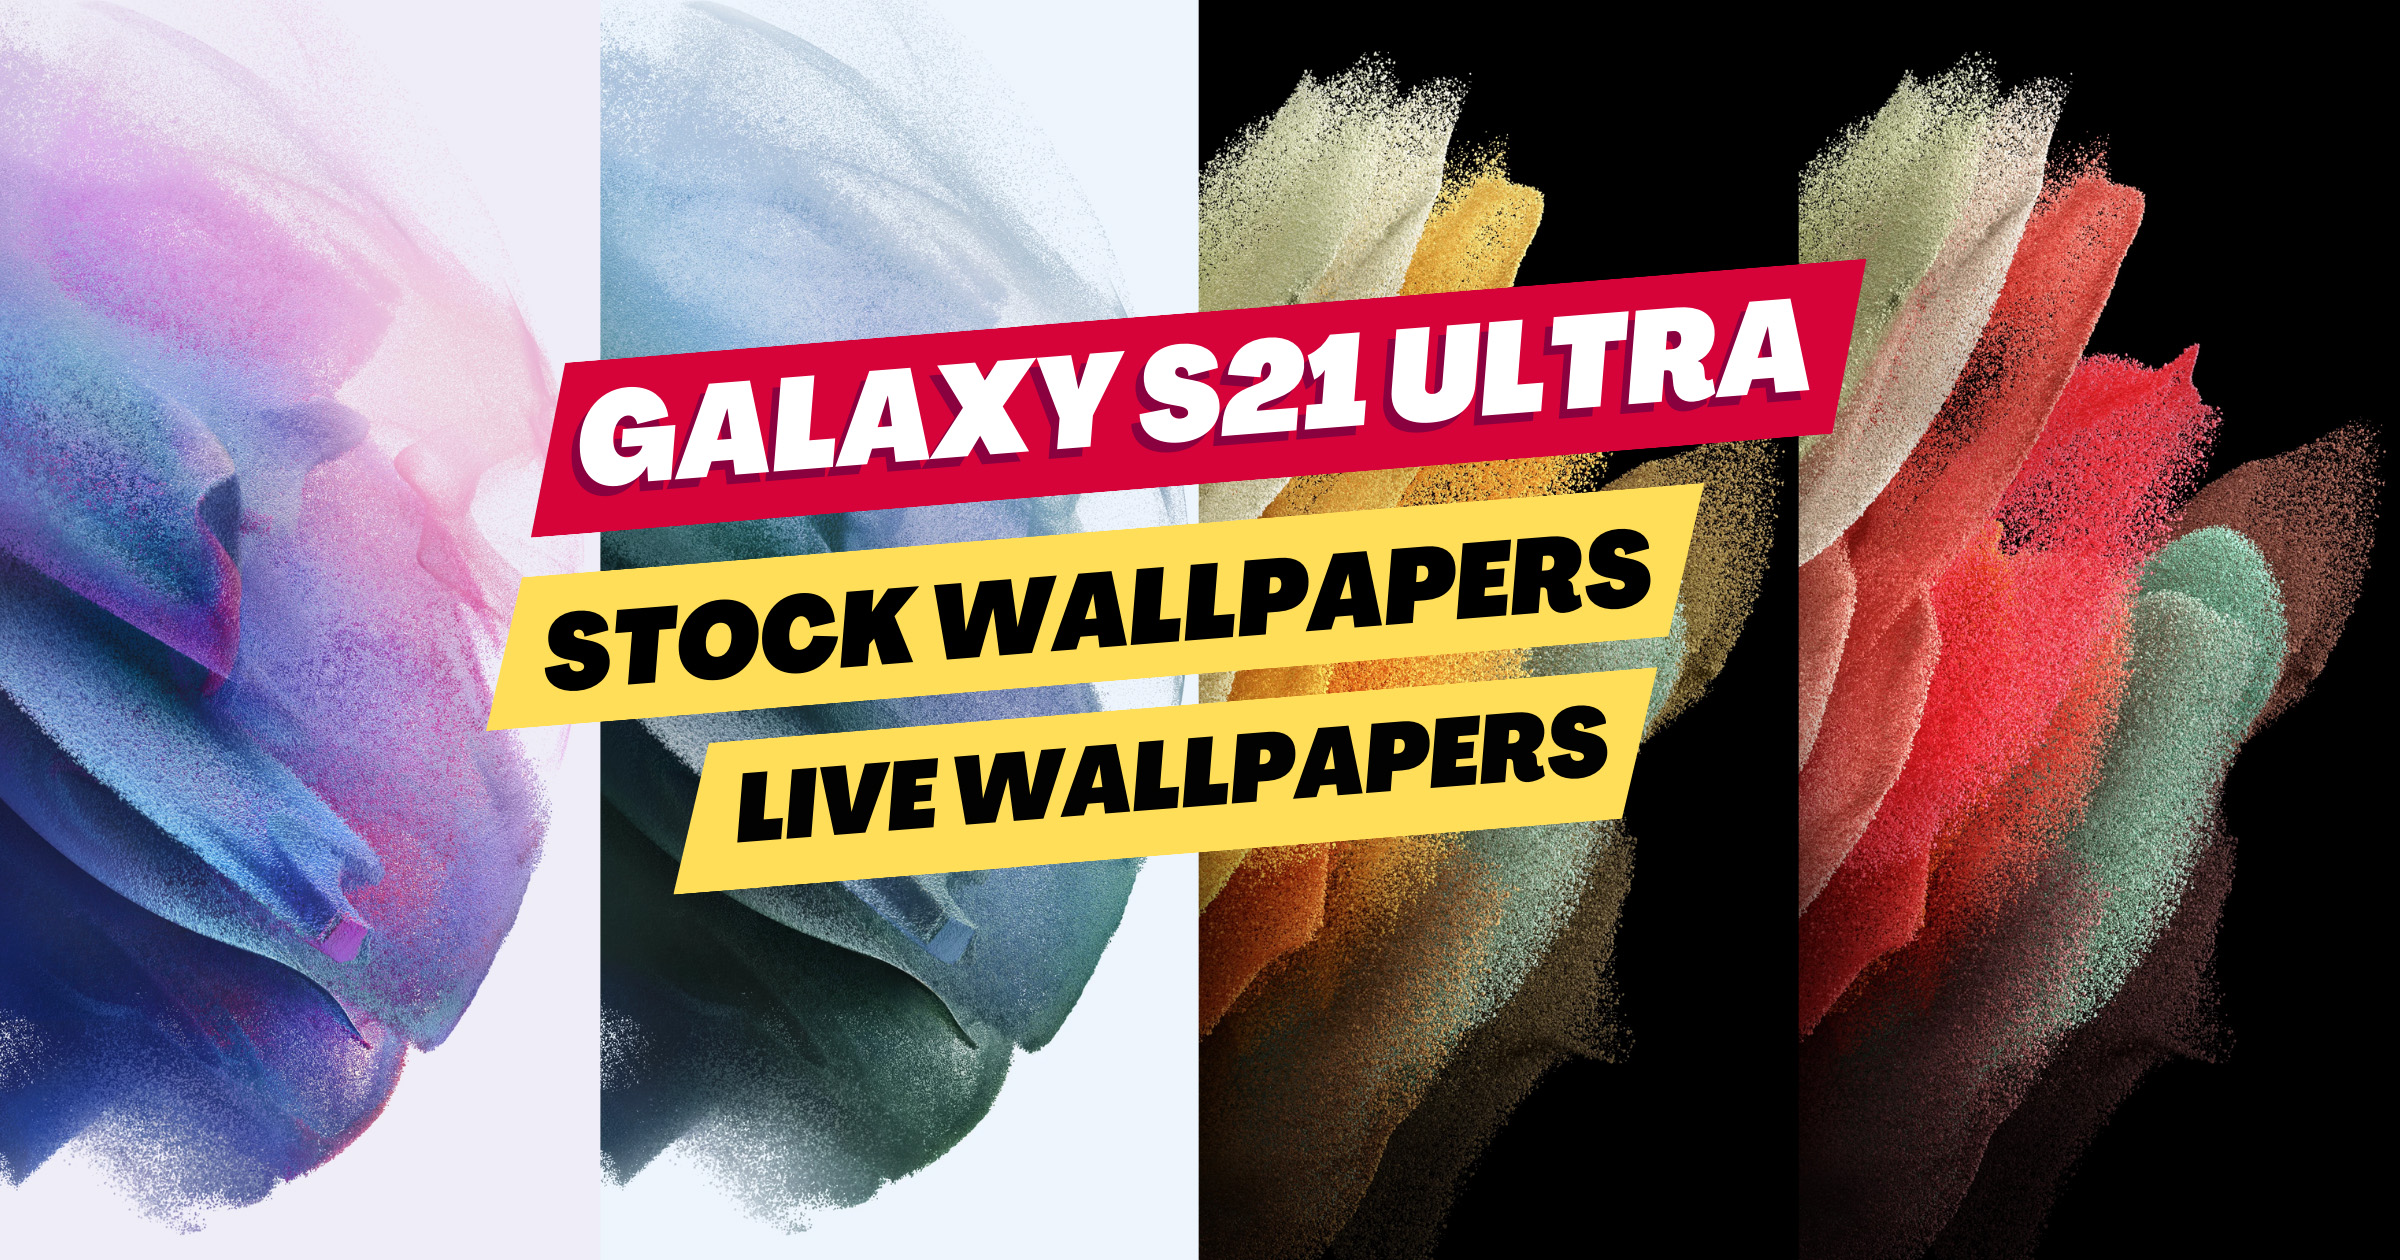 Samsung galaxy S21 ultra wallpapers - Samsung Members